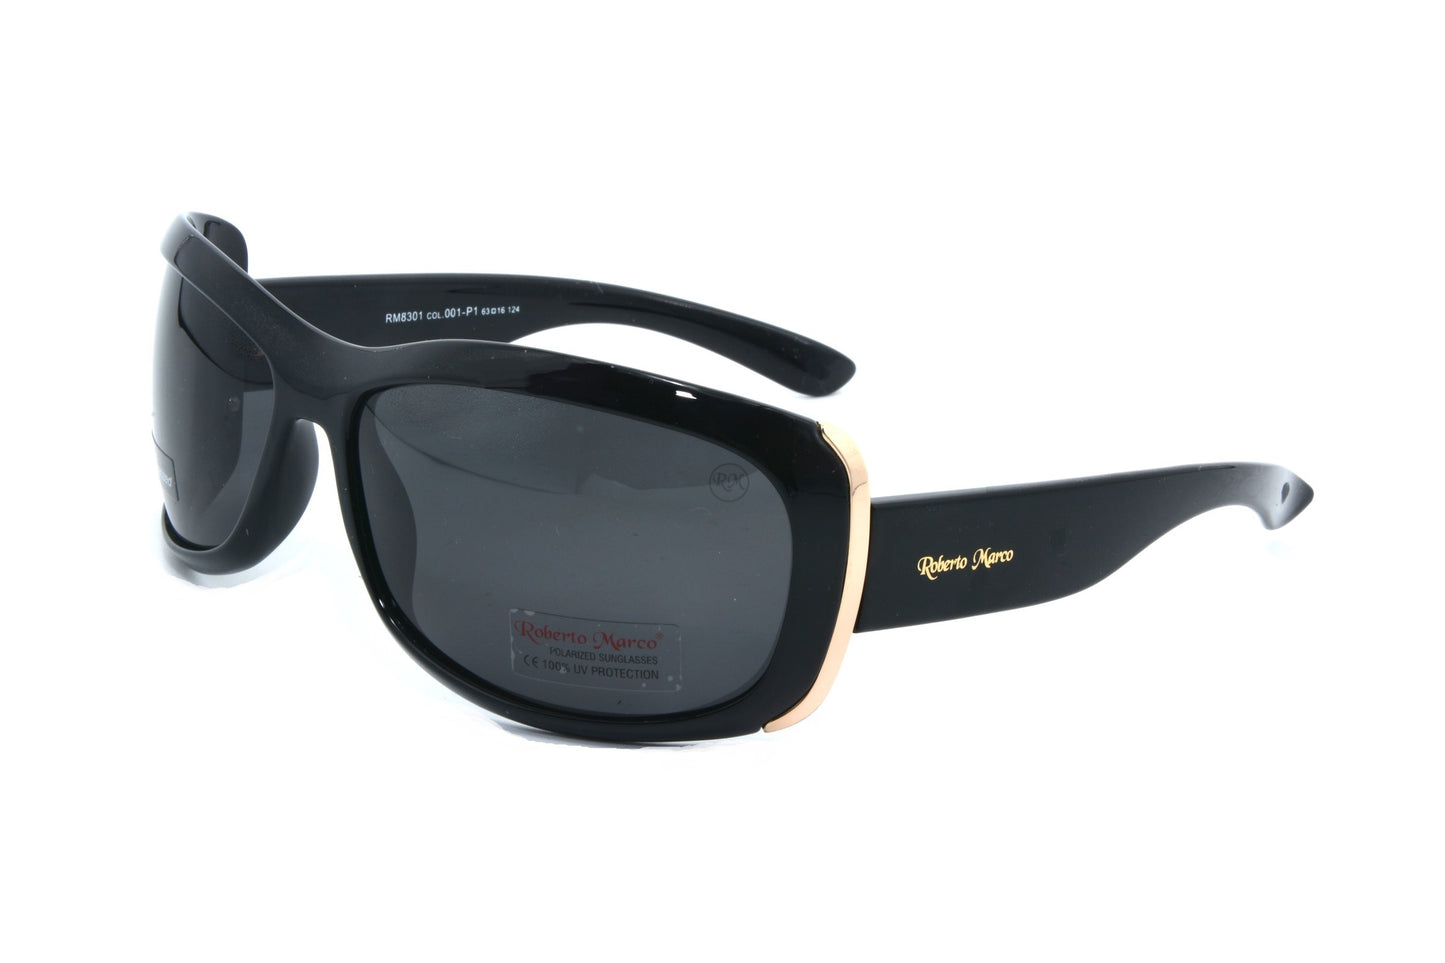 Roberto Marco sunglasses RM8301 001-P1